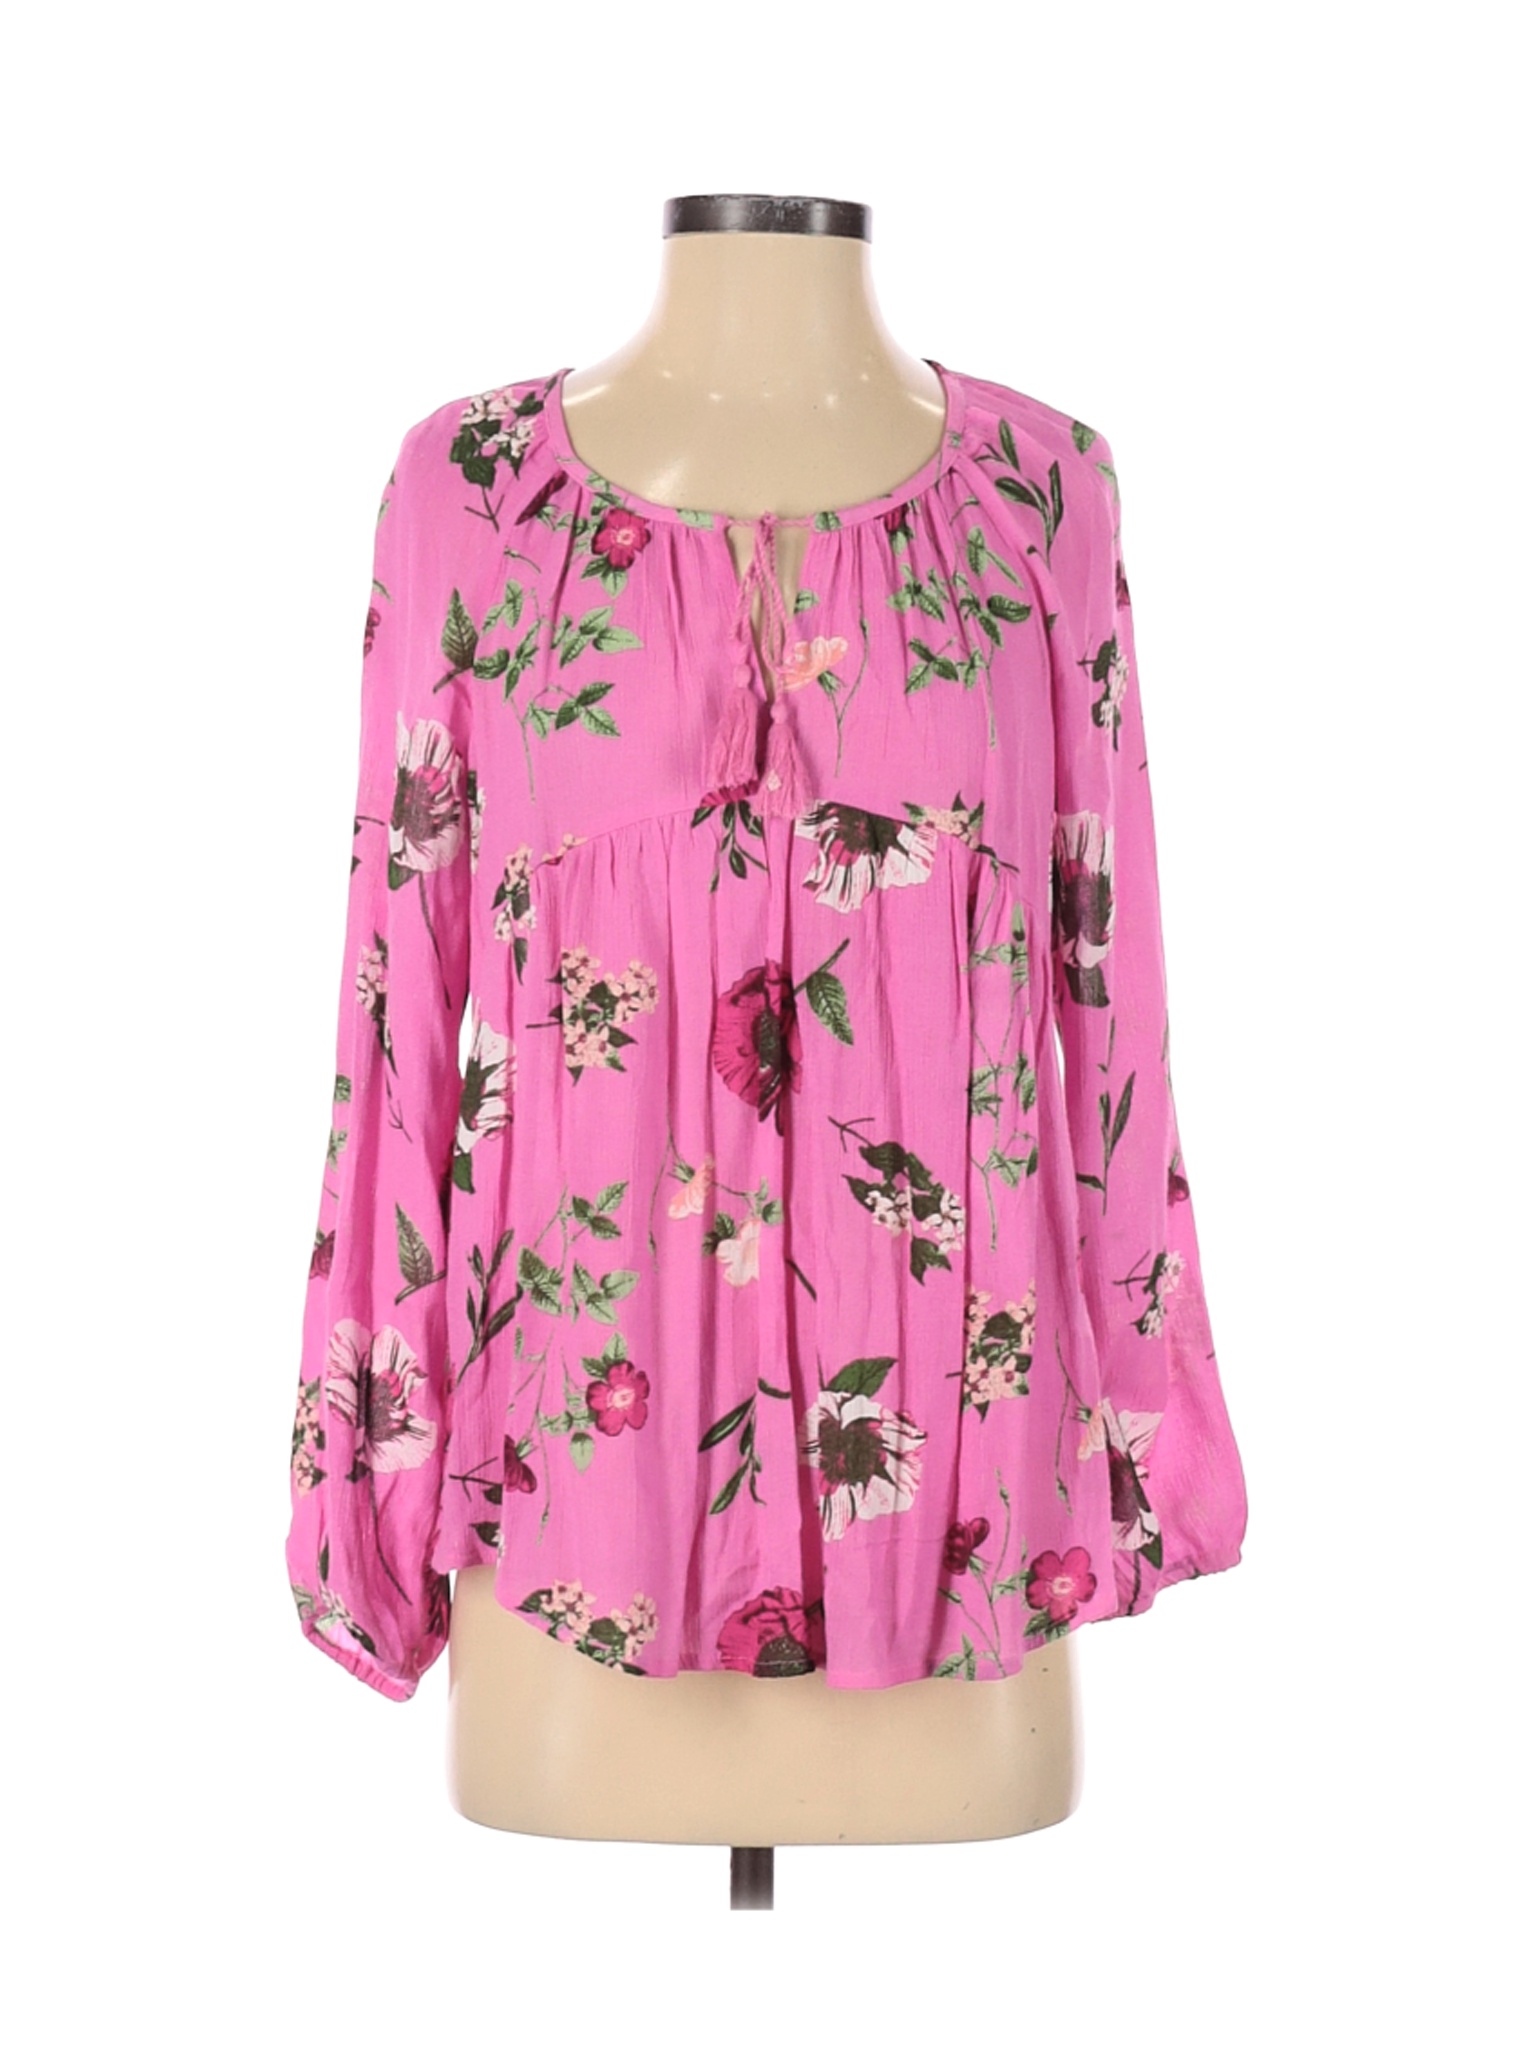 Old Navy Women Pink Long Sleeve Blouse S | eBay